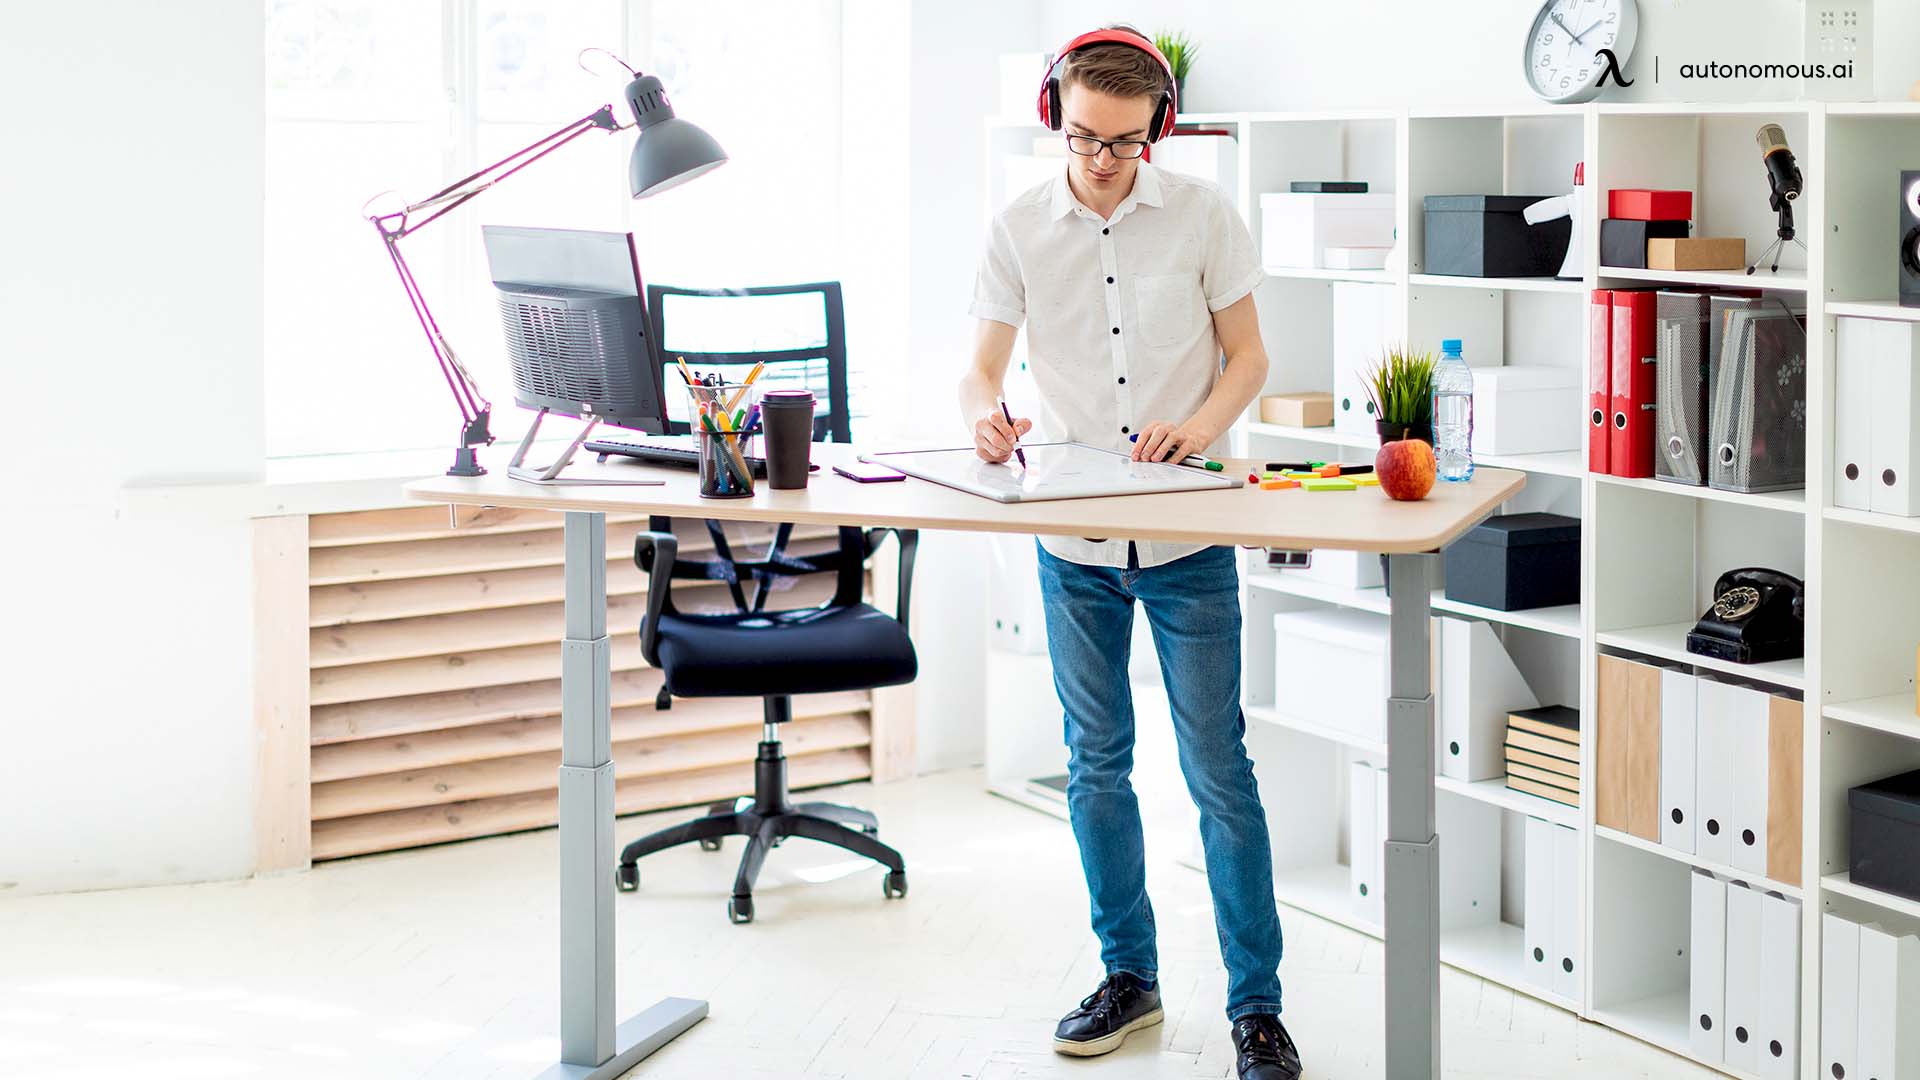 Dedicate a proper workspace for your tasks